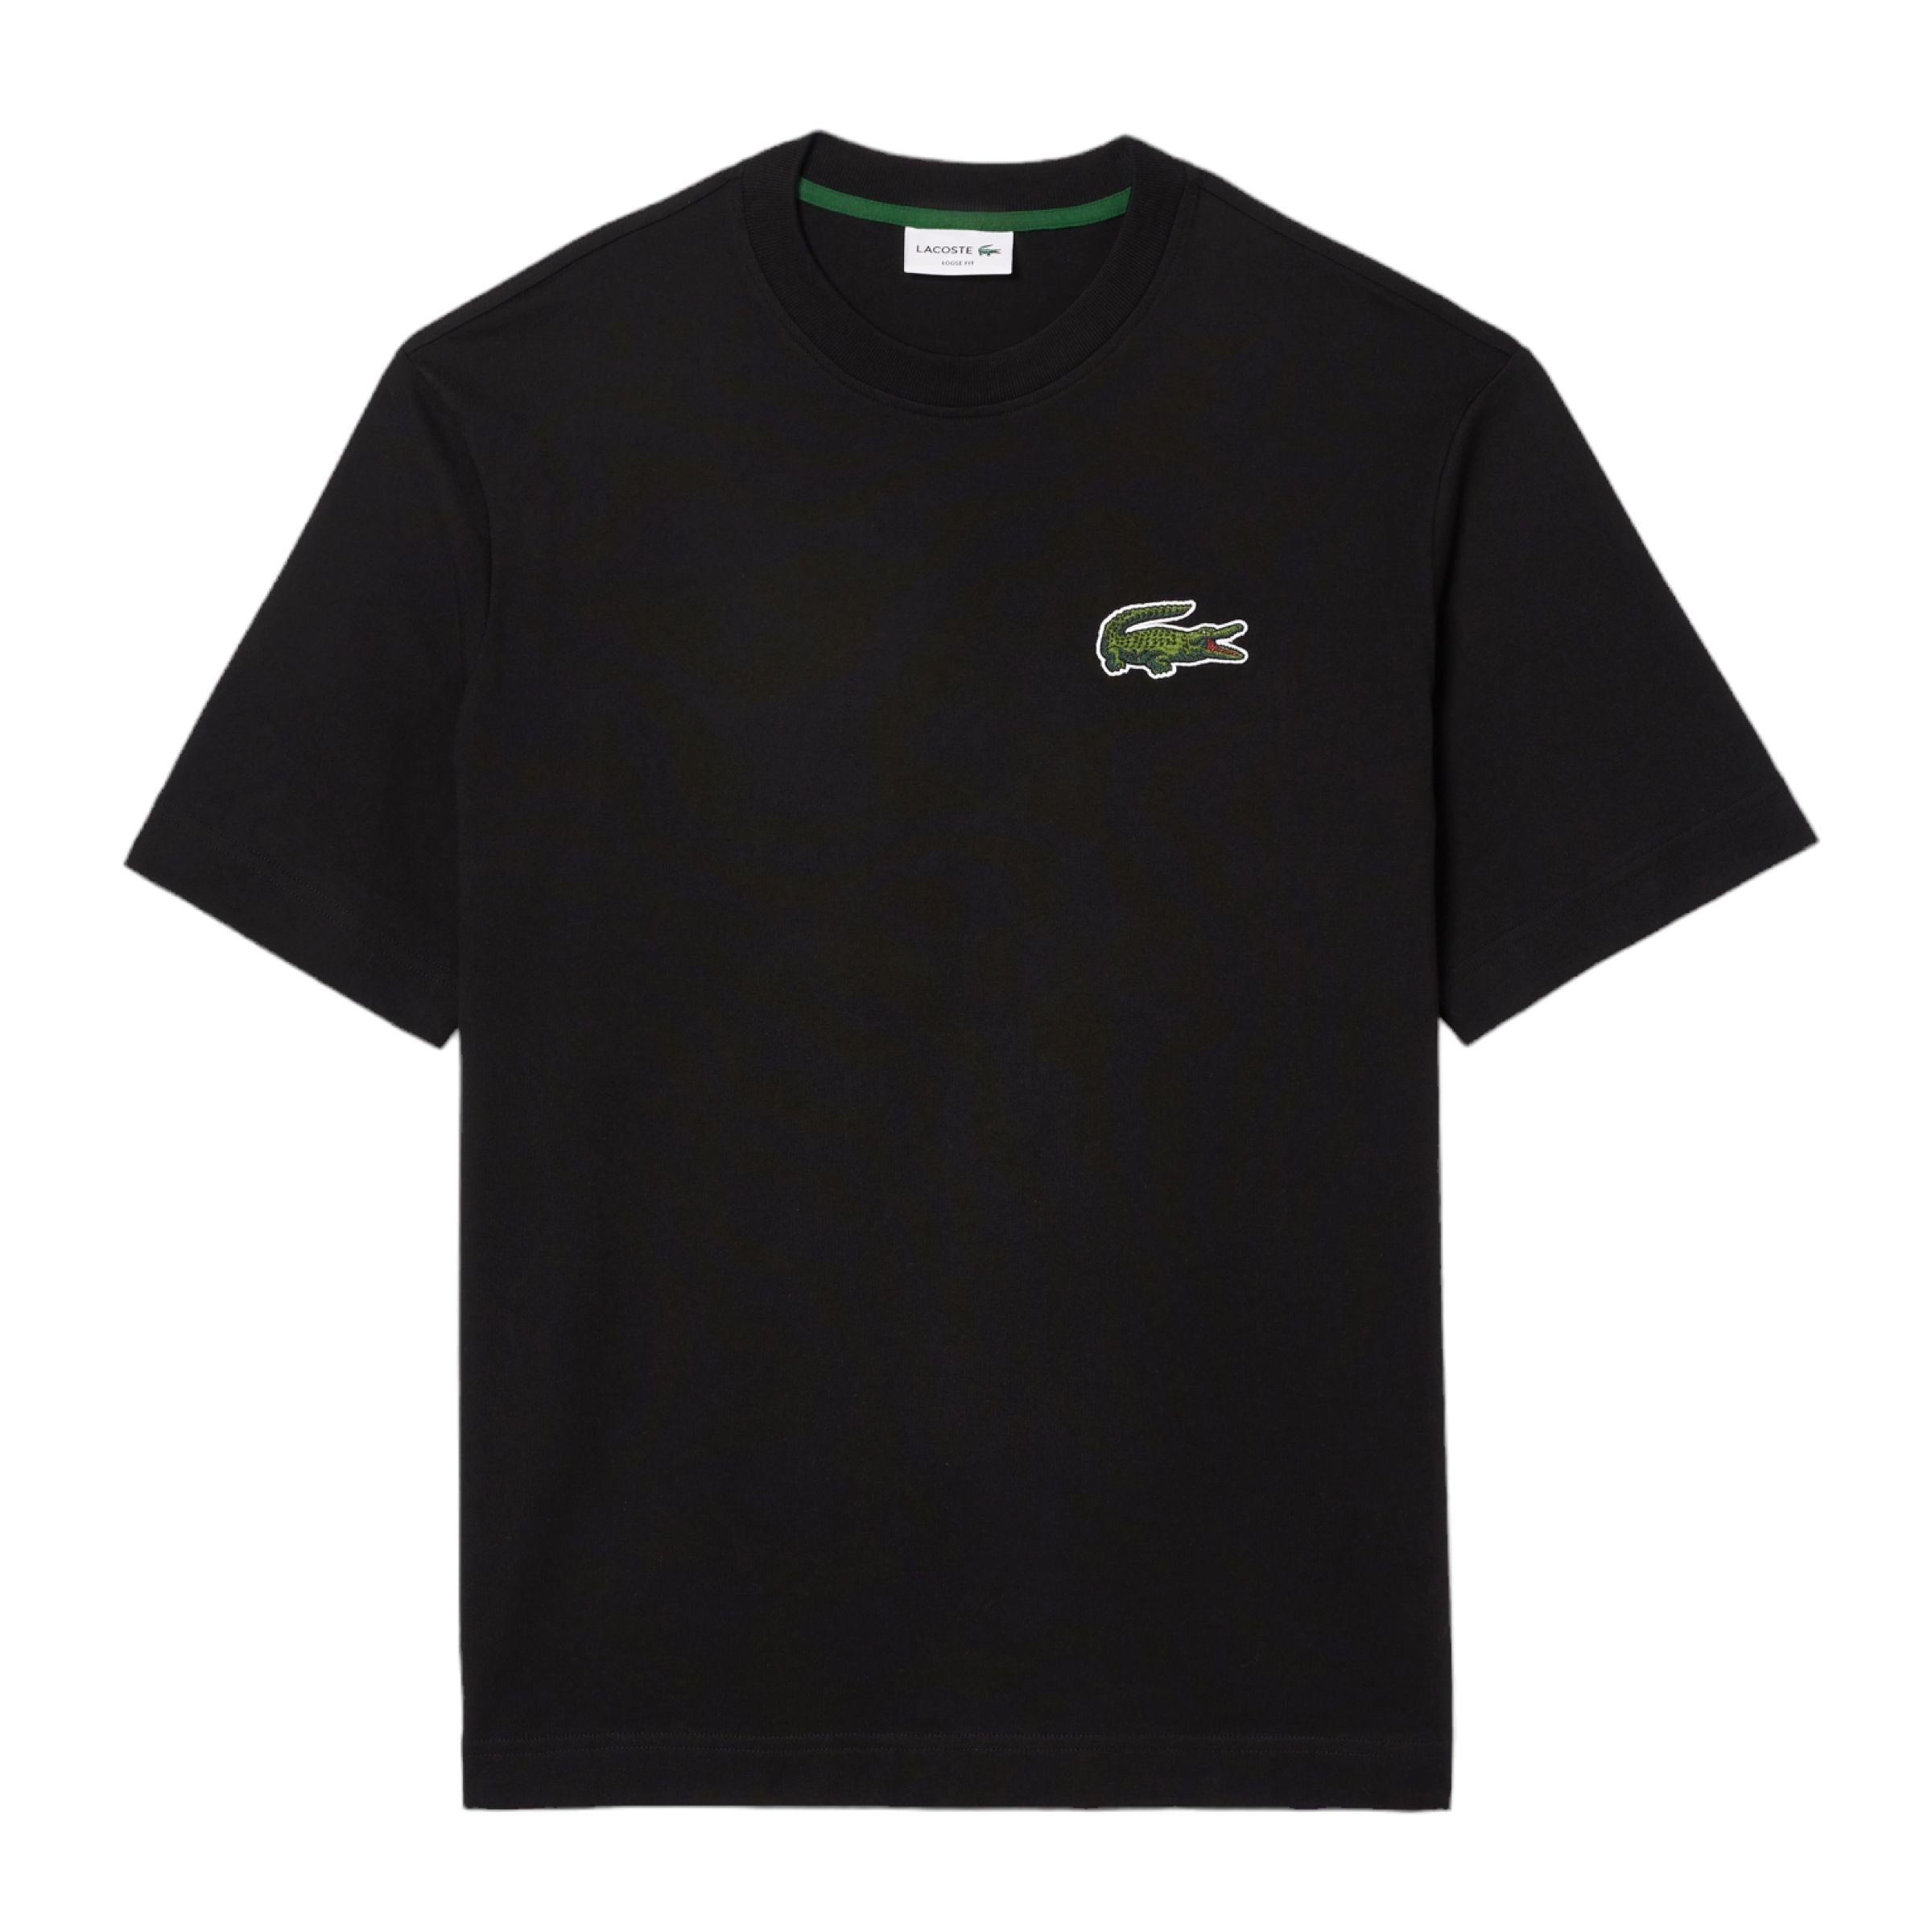 Men's Loose Fit Large Crocodile T-shirt Black 